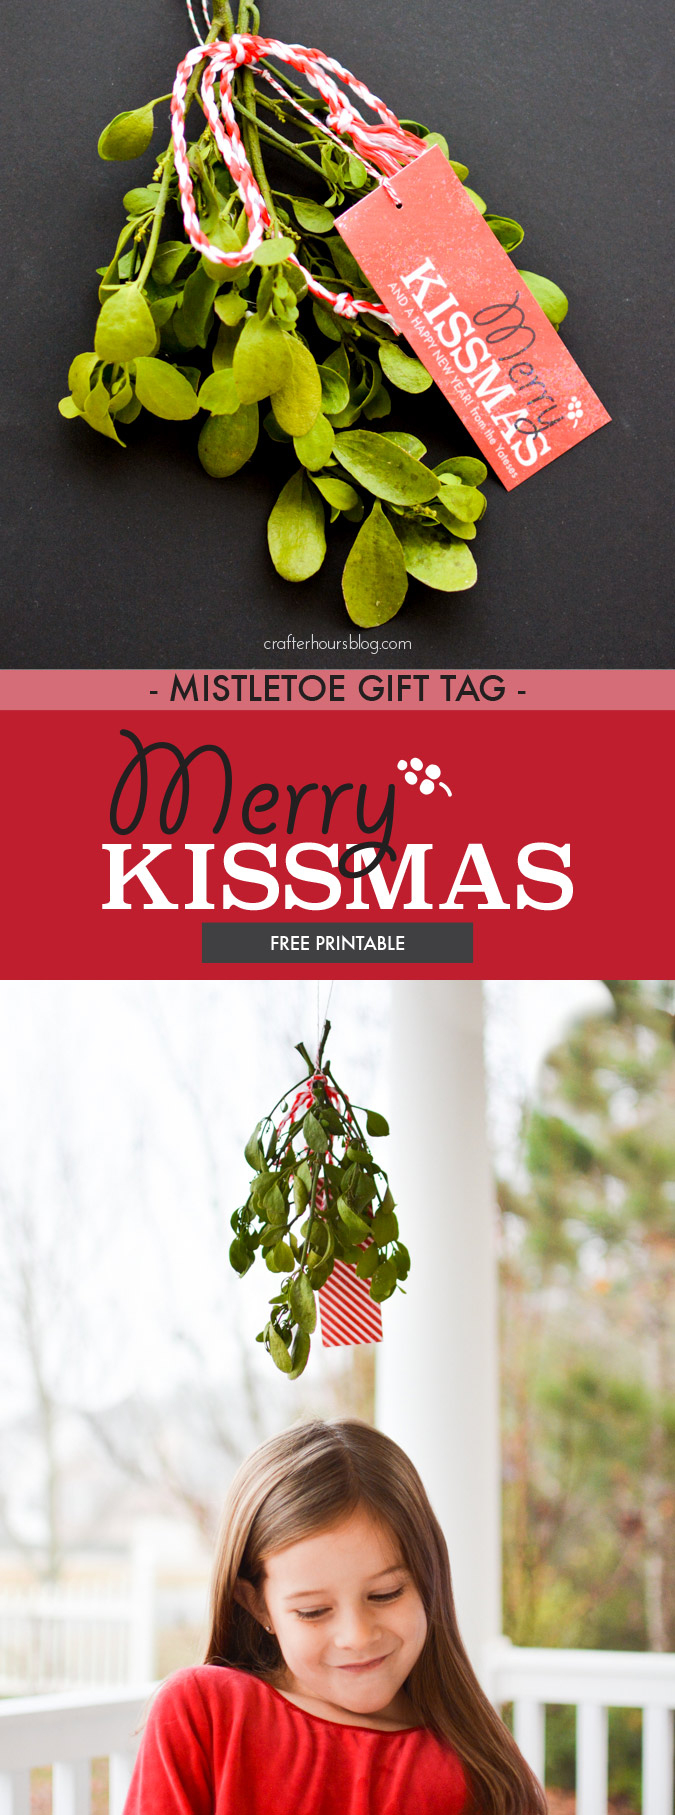 Merry Kissmas! Free Mistletoe Gift Tag Printable - Free Printable Mistletoe Tags